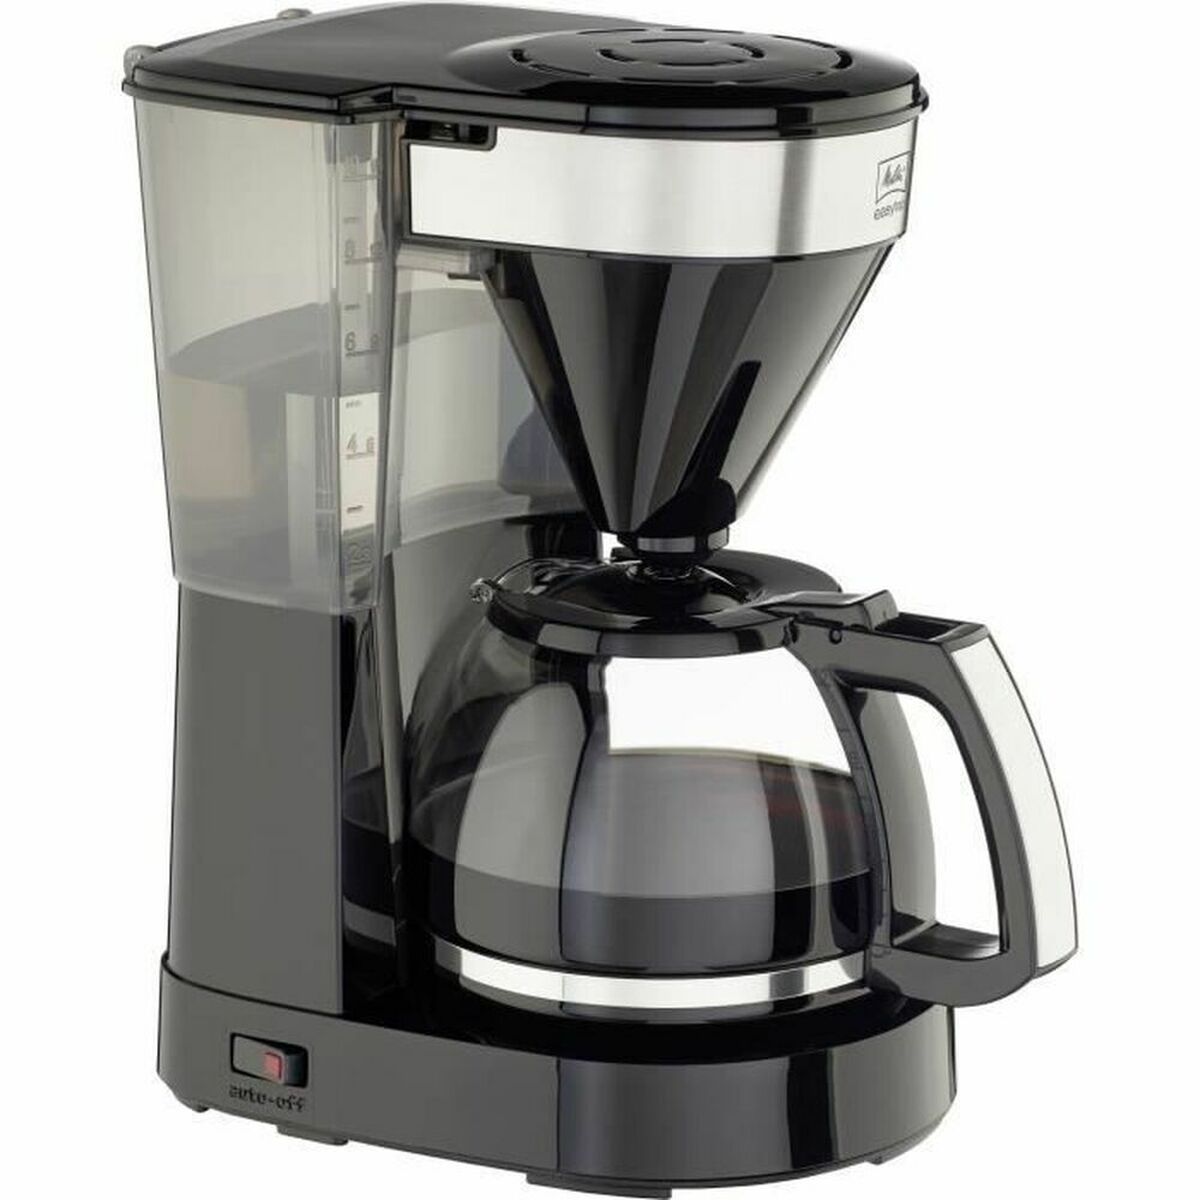 Elektrische Kaffeemaschine Melitta Easy Top II 1023-04 1050 W Schwarz 1050 W 1,25 L 900 g - CA International  